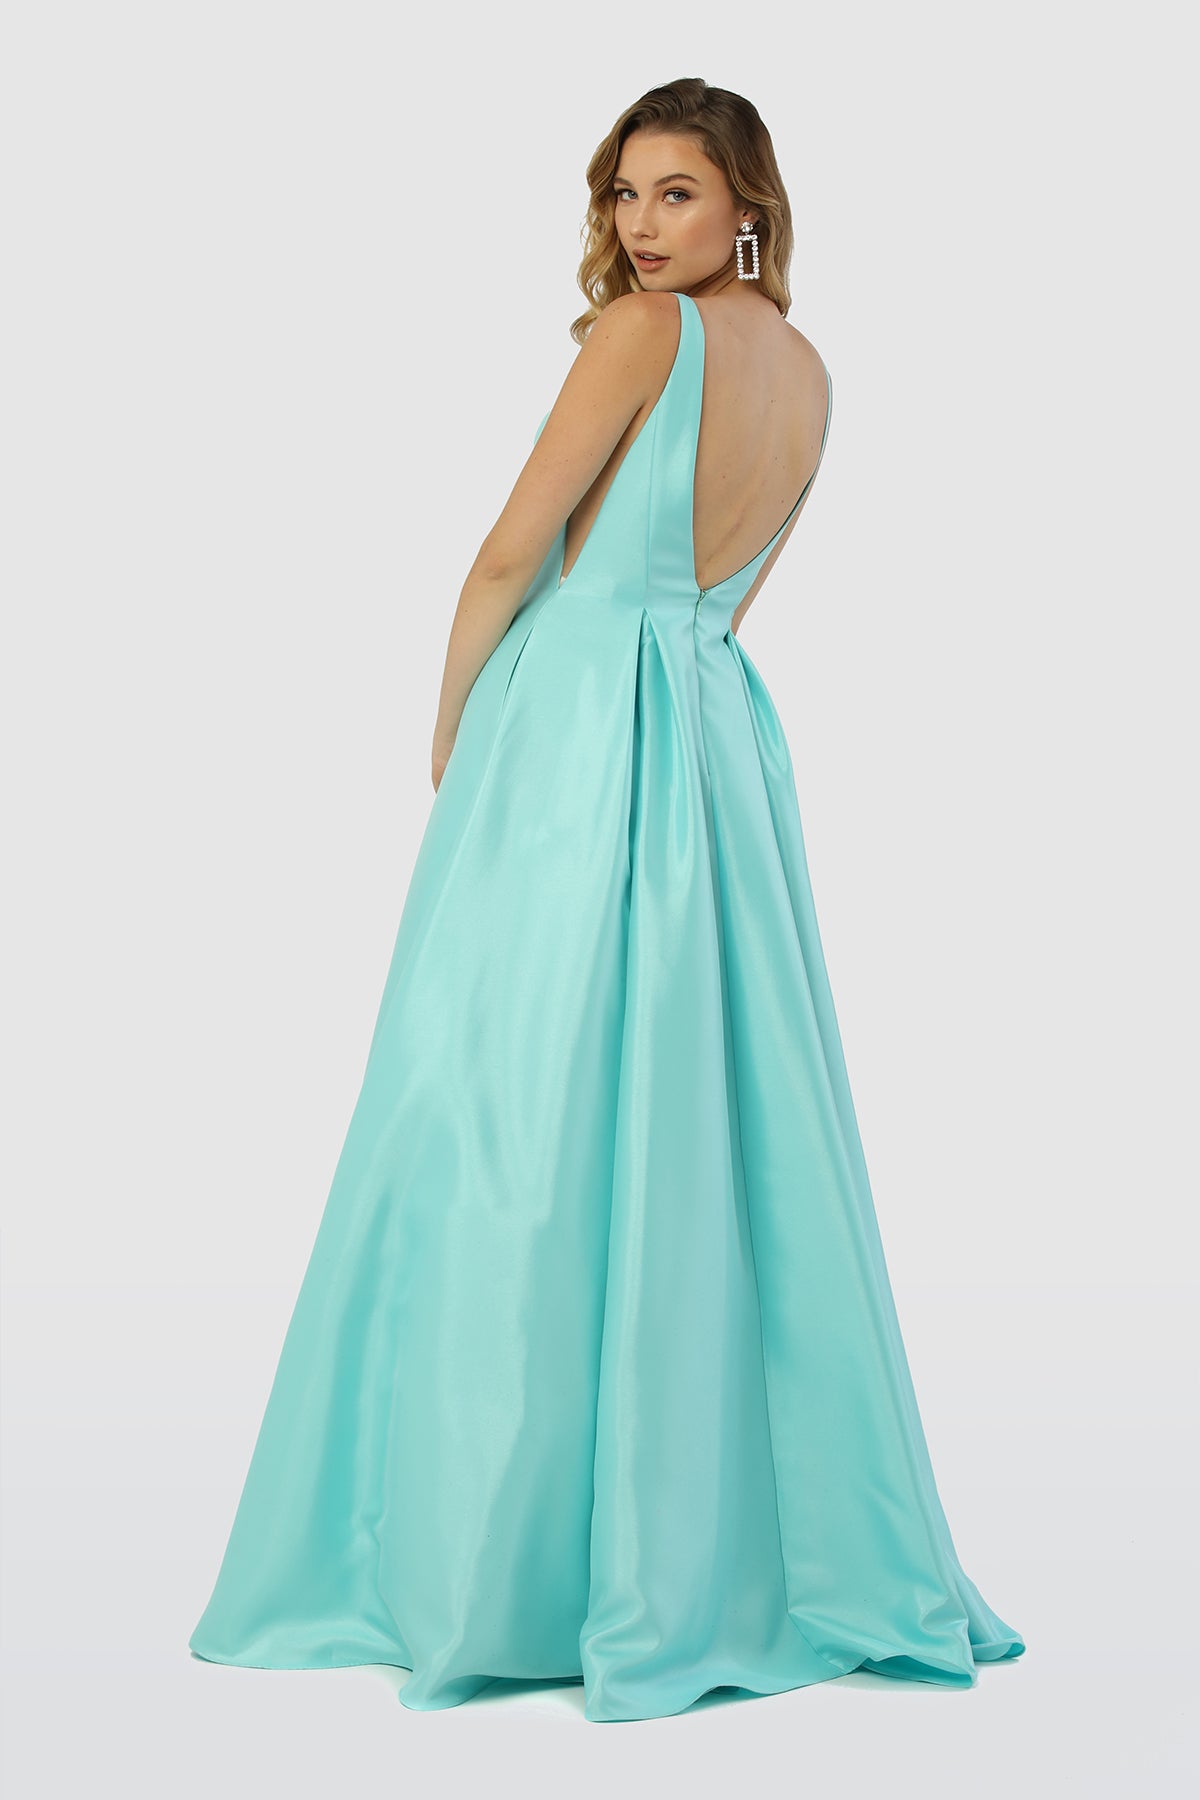 A-Line Sheer Side Cut Out Open V-Back Long Prom Dress NXE156-Prom Dress-smcfashion.com